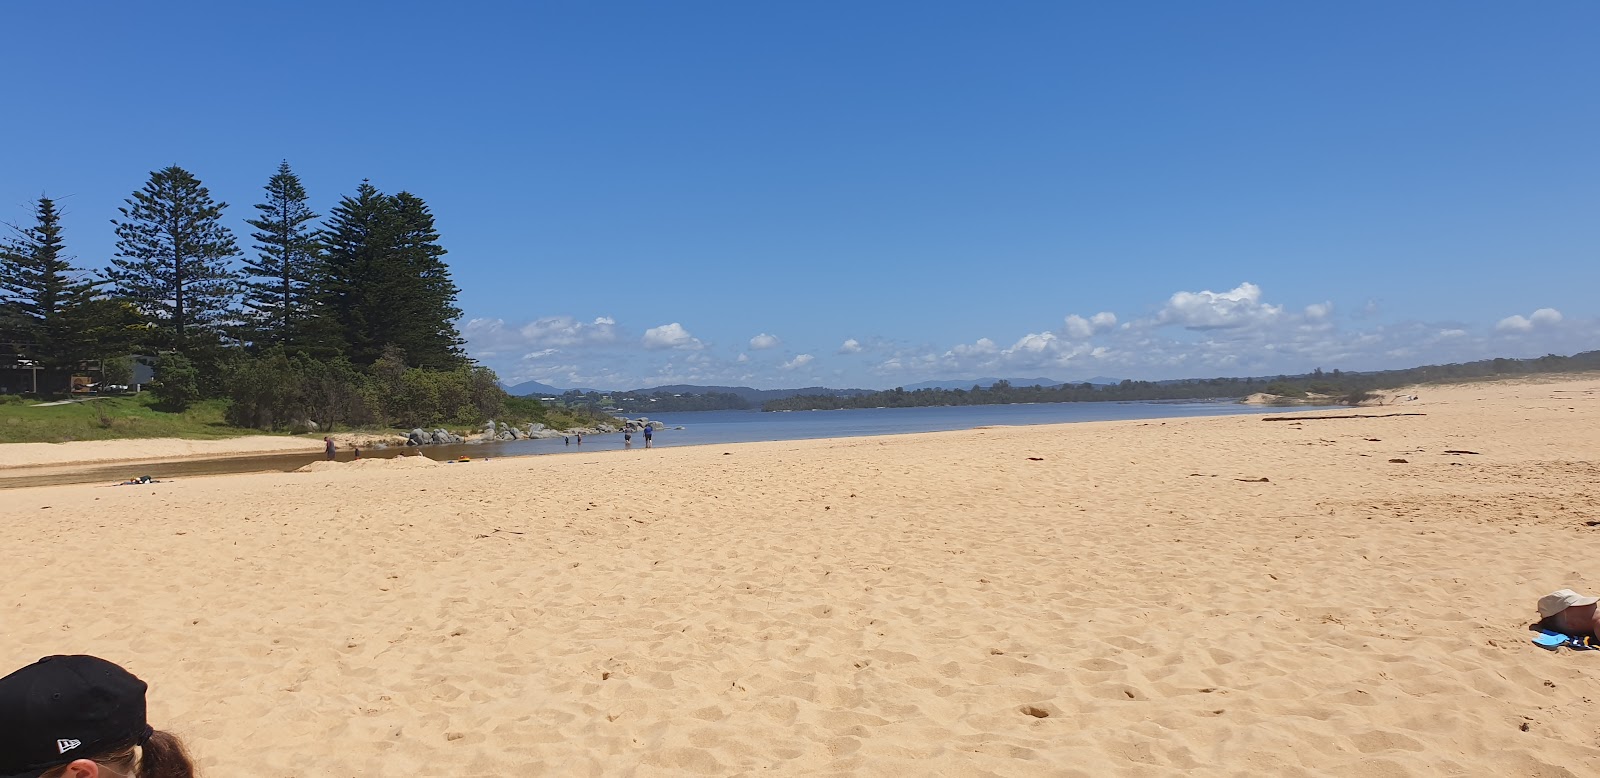 Foto de Bingie Beach - lugar popular entre os apreciadores de relaxamento